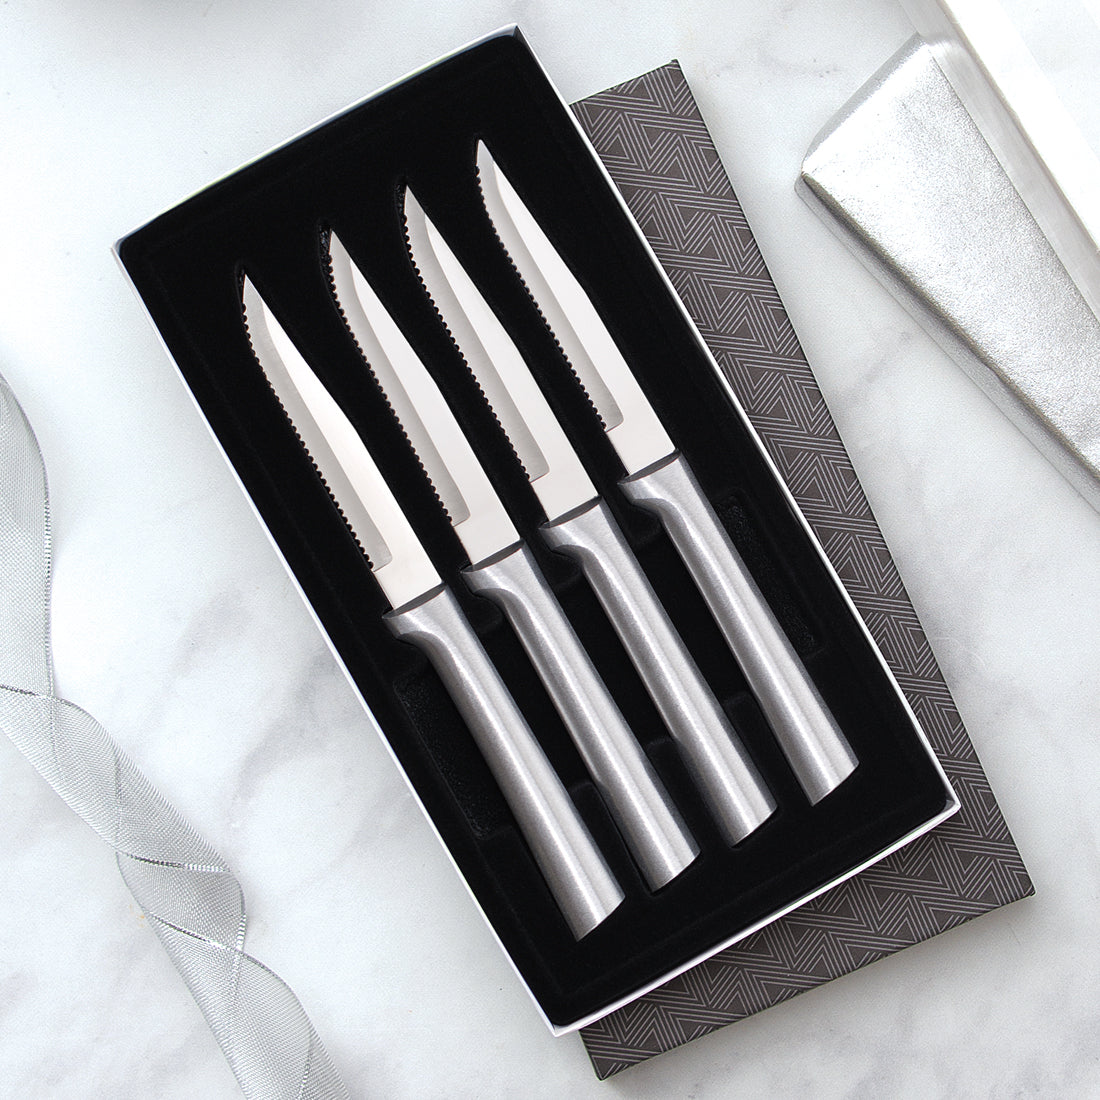 Kitchen Knives Gift Set - 4 Serrated Steak Knives 5' Set in Wooden Box –  Steakman